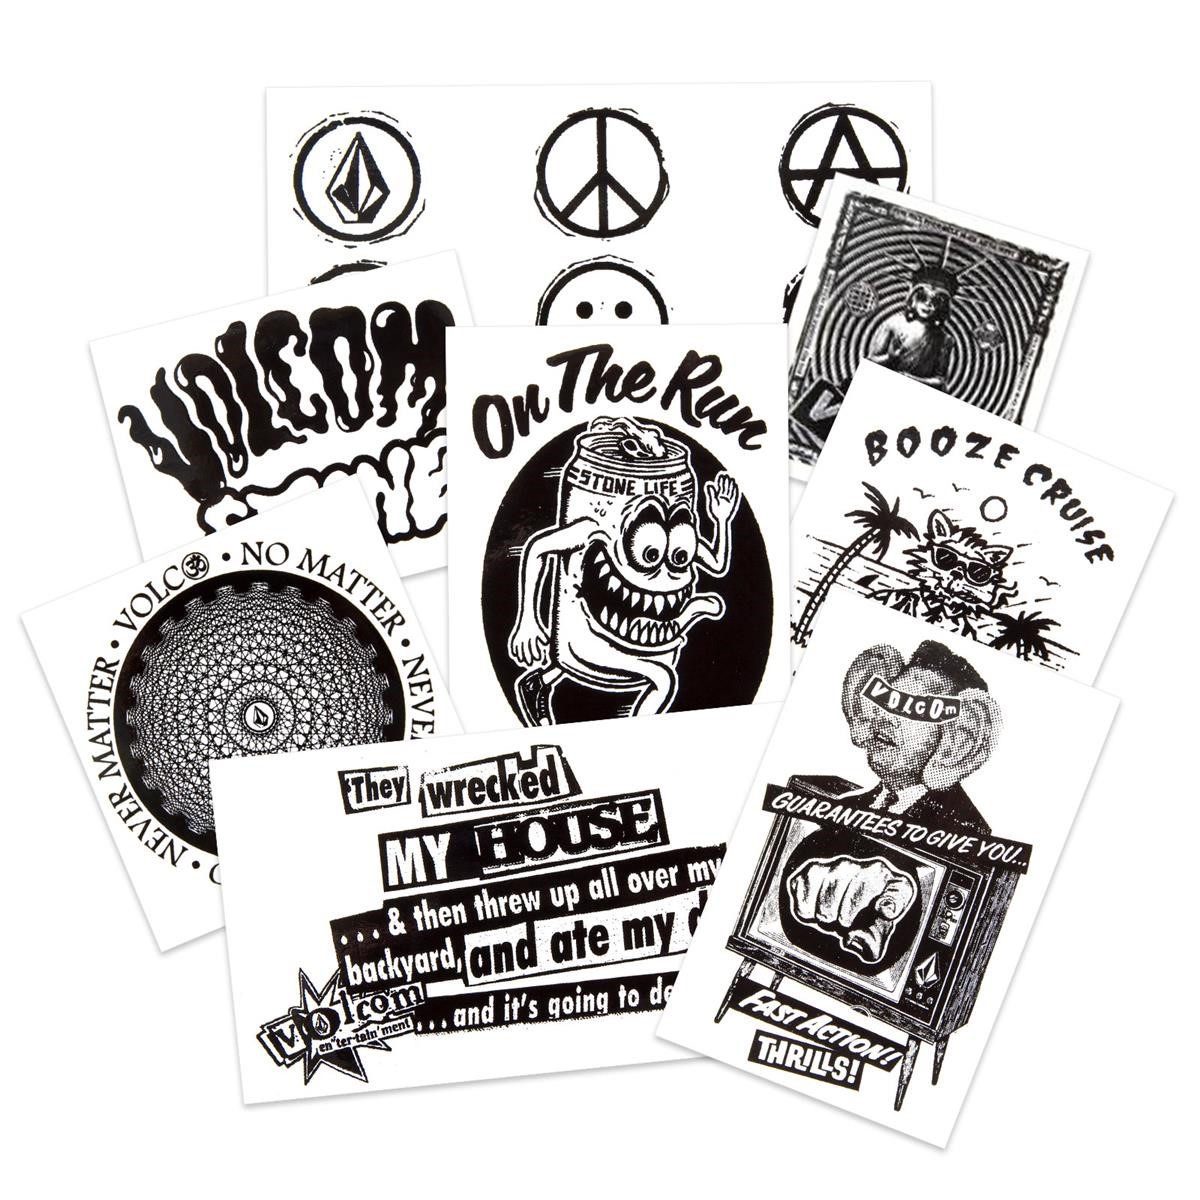 Volcom Bundle-Offer Sticker Slimy Stone + Psychodelic + Destroy + On the Run + Pics + Booze Cruise + No Matter + Guarantees